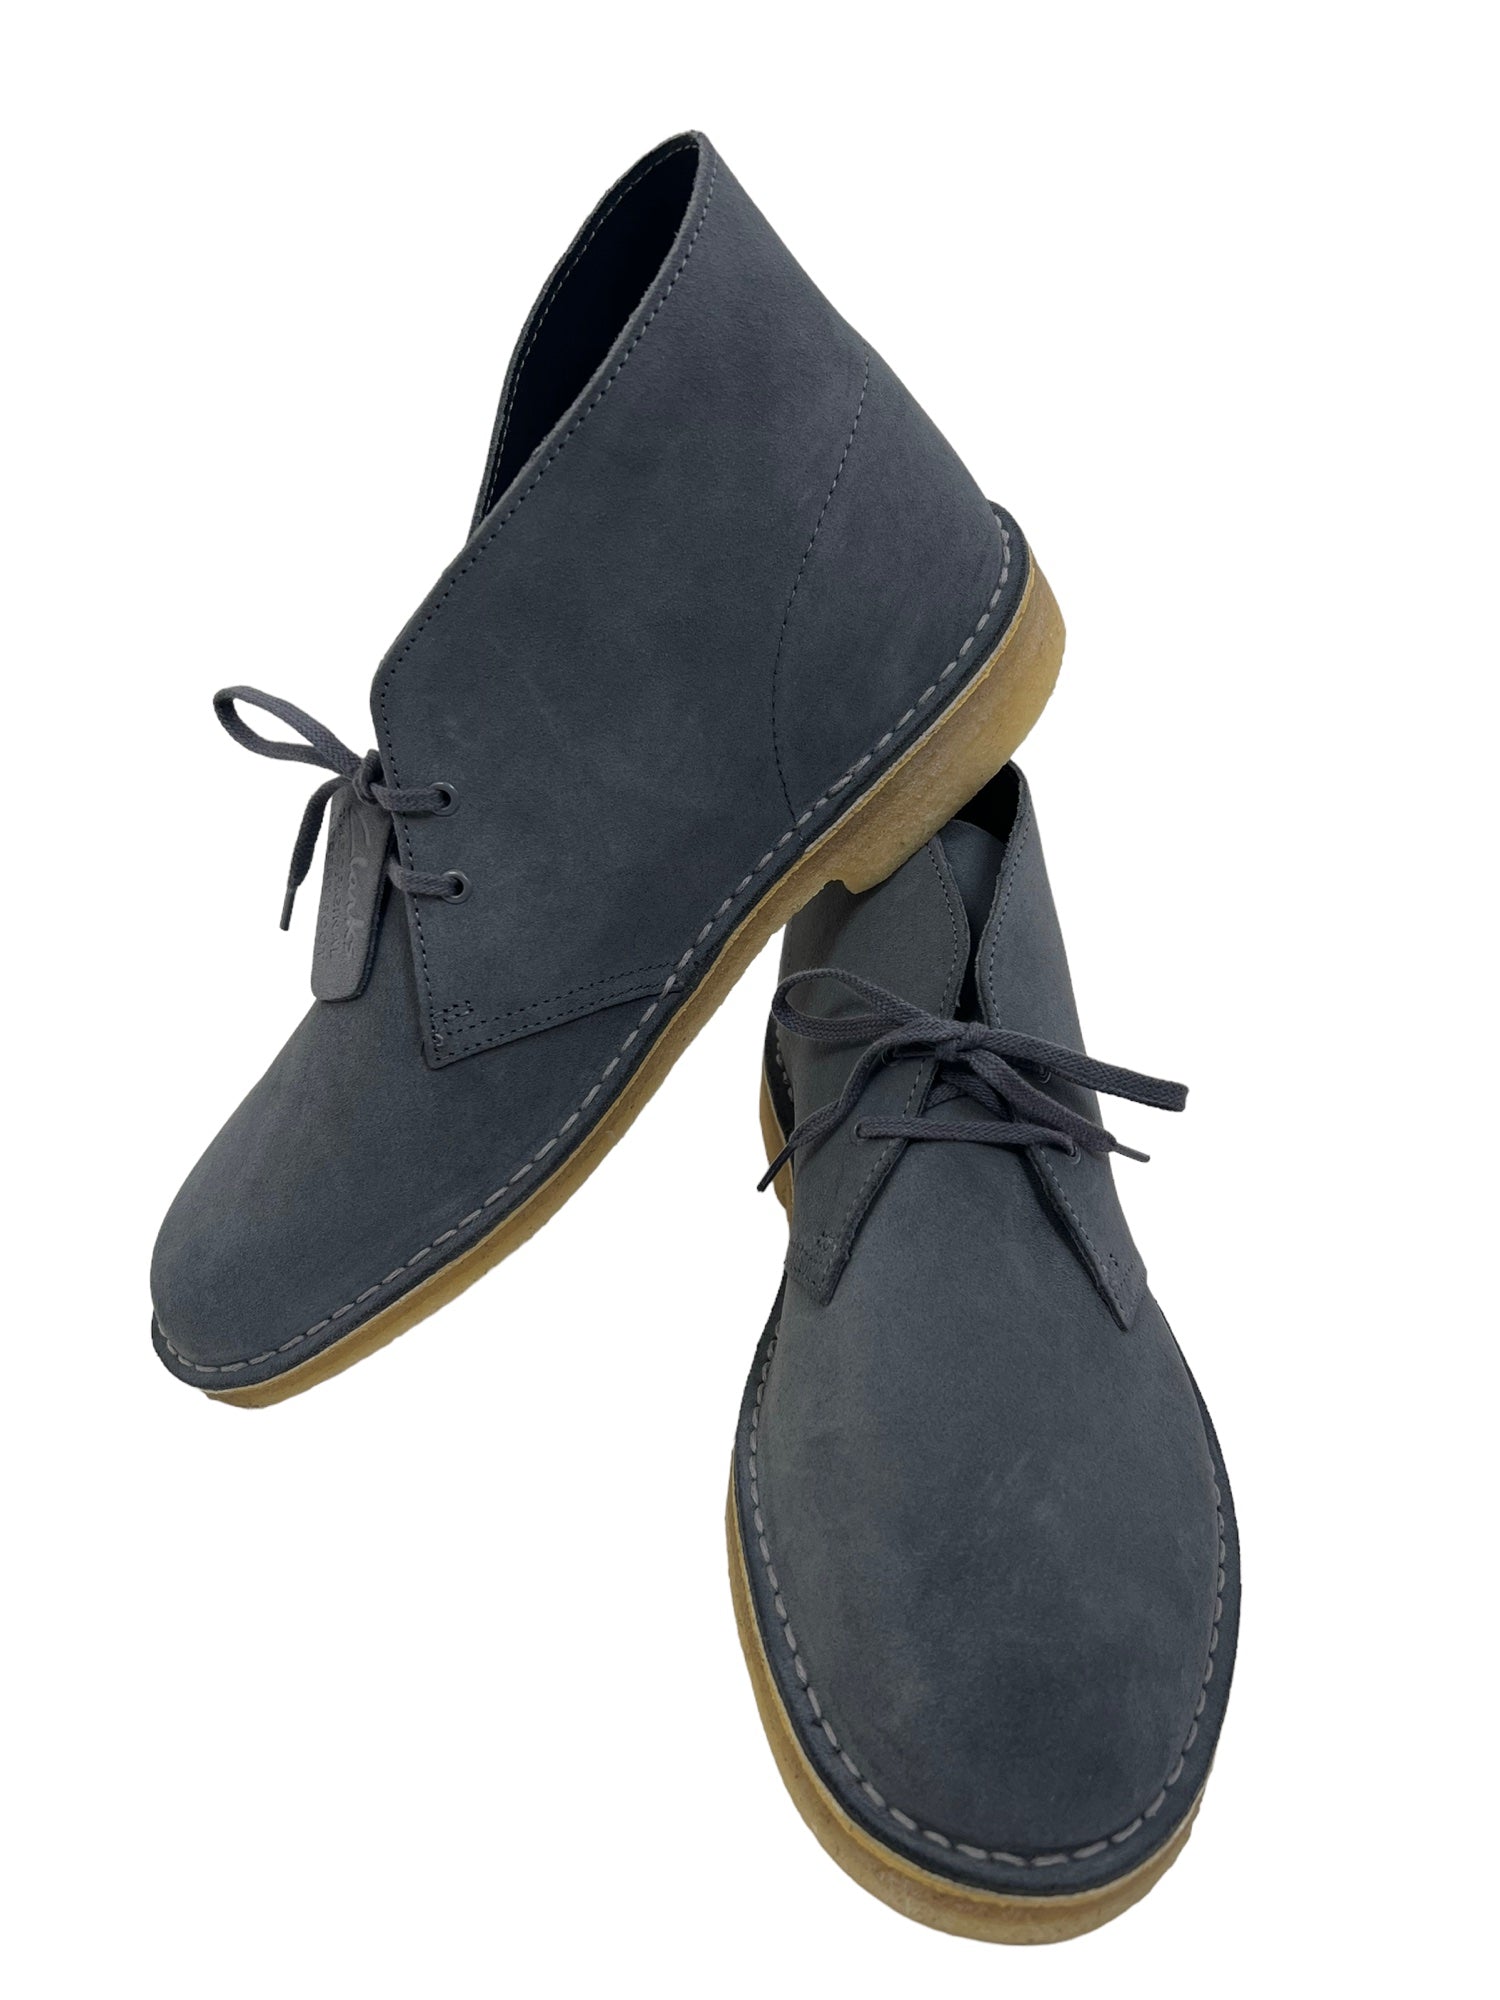 Clarks Originals Suede Desert Boots Shoes in Grey Blue - Size UK 9.5 - Mens Shoes Urban Village – UrbanVillageVintage